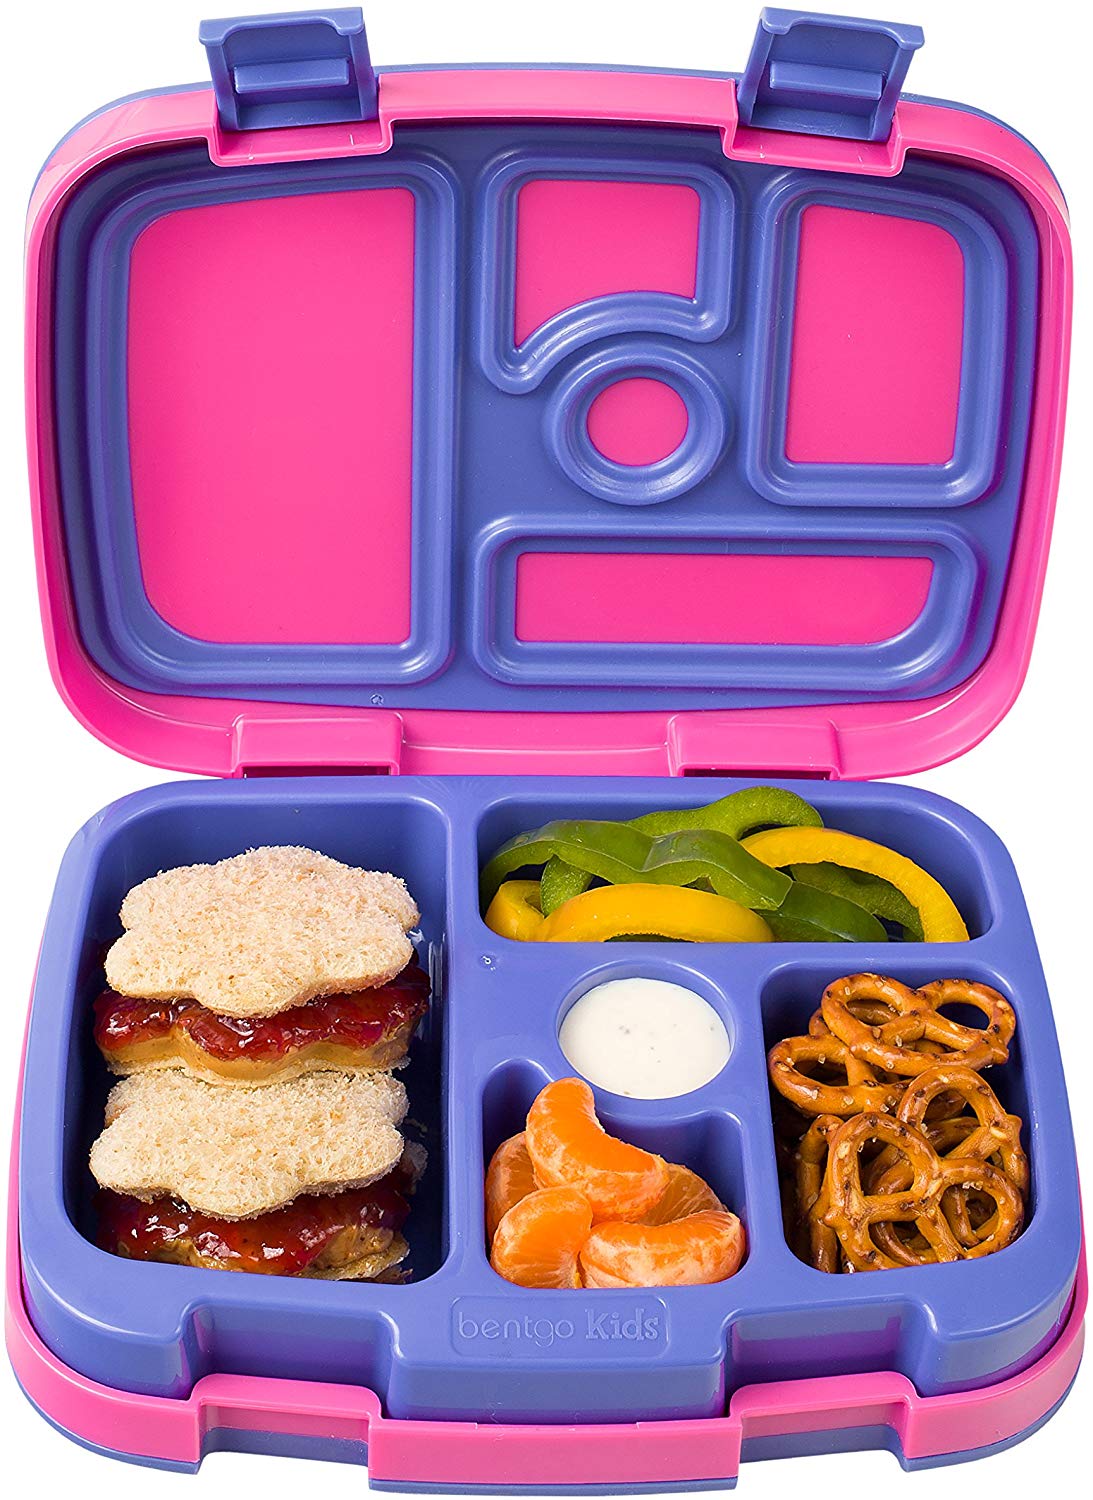 https://www.dontwasteyourmoney.com/wp-content/uploads/2019/11/bentgo-kids-brights-leak-proof-5-compartment-bento-style-kids-lunch-box-bento-lunchbox.jpg